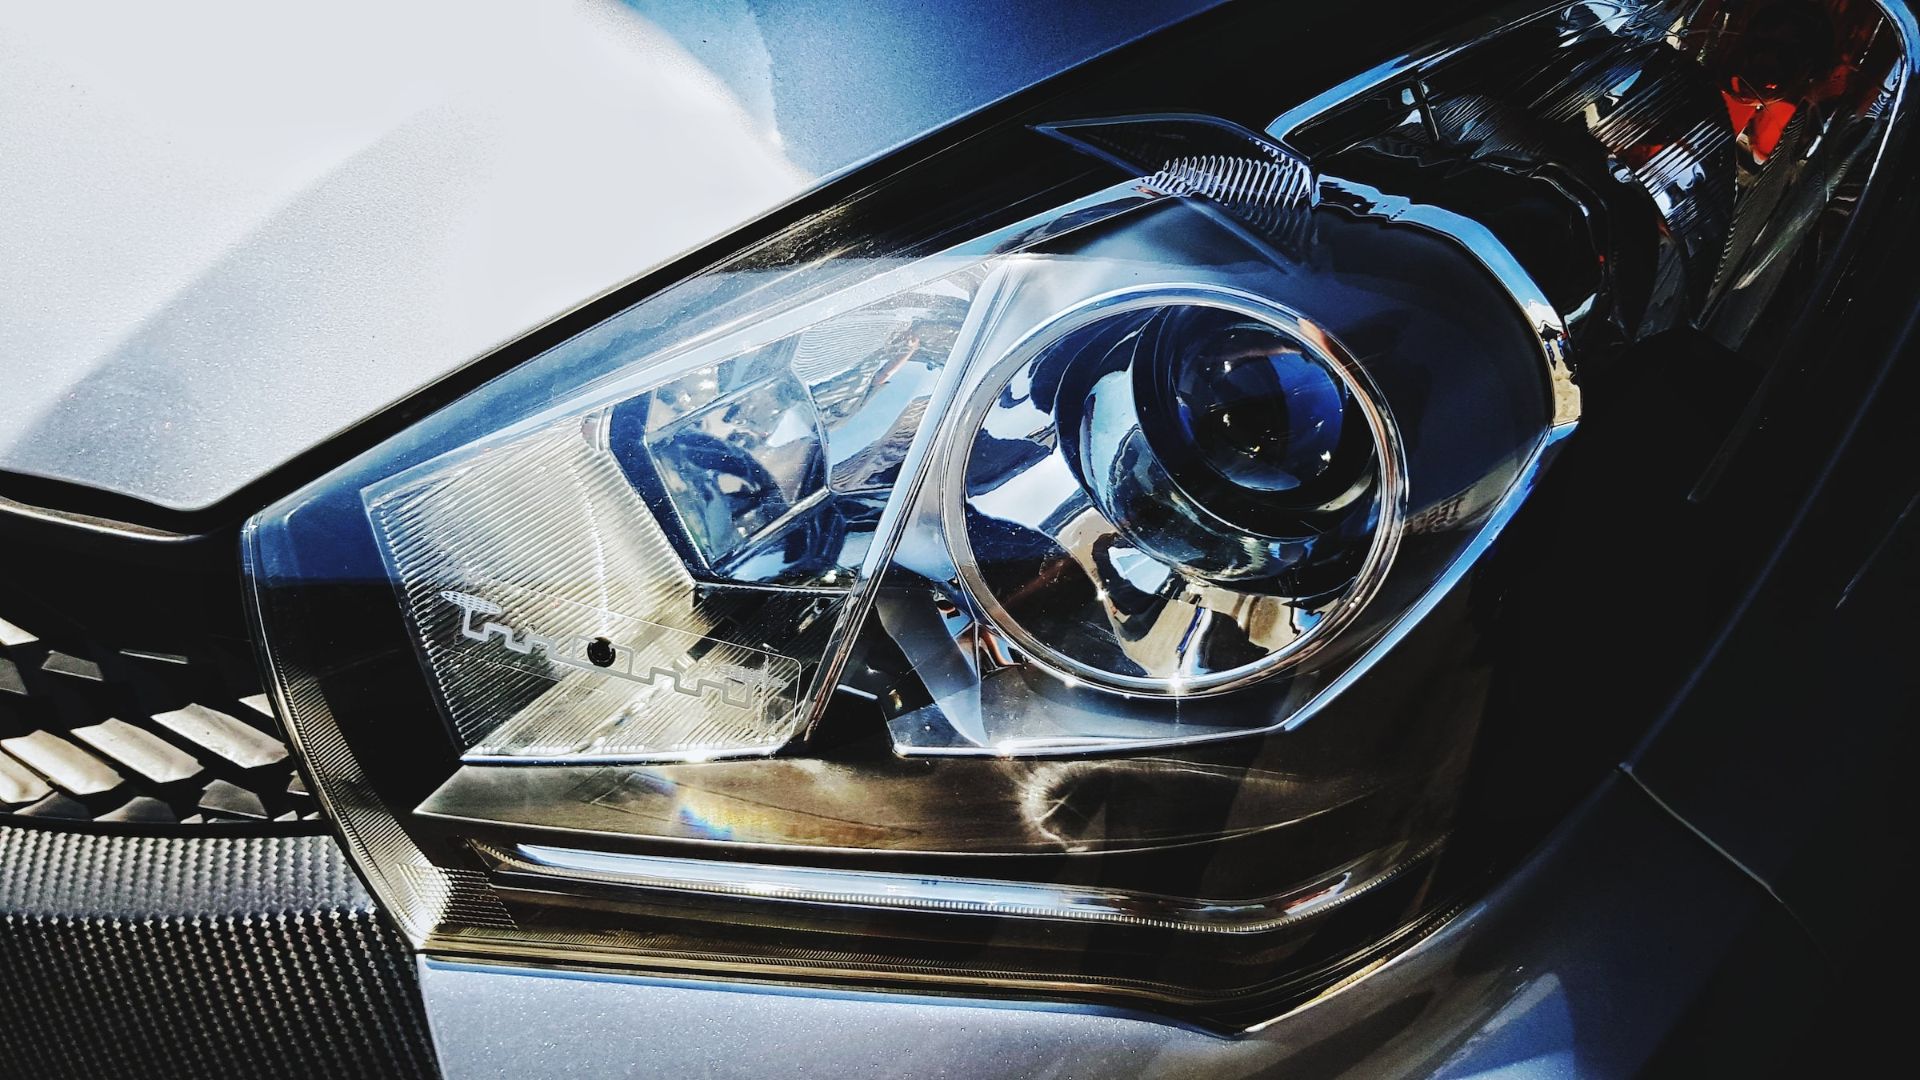 a close up of a headlight on a car.